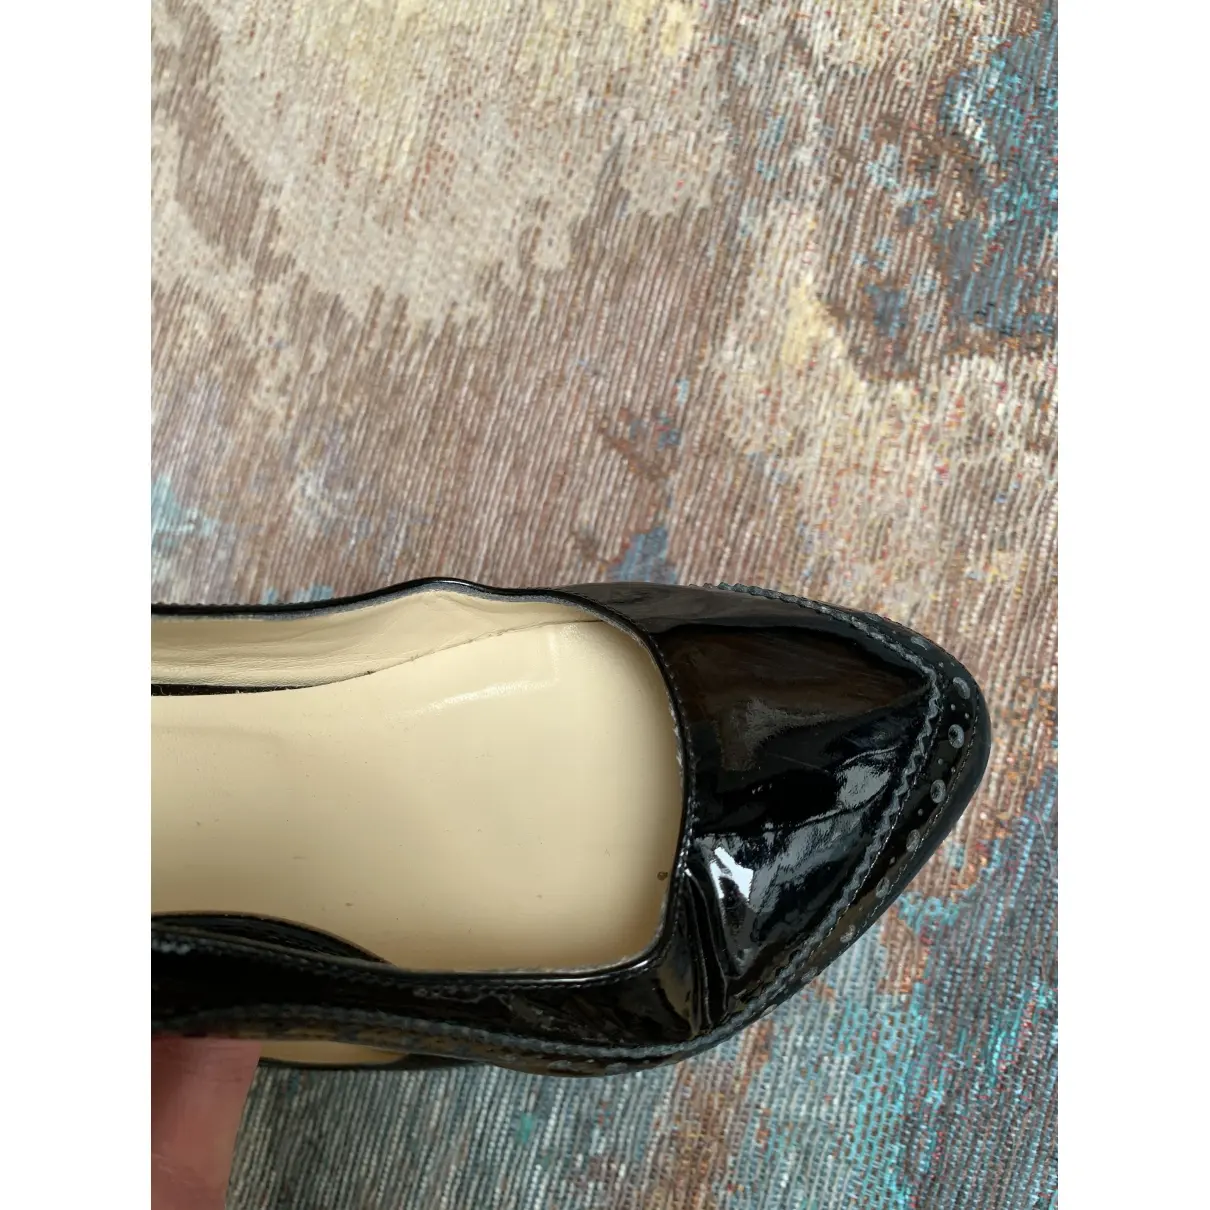 Patent leather heels Furla